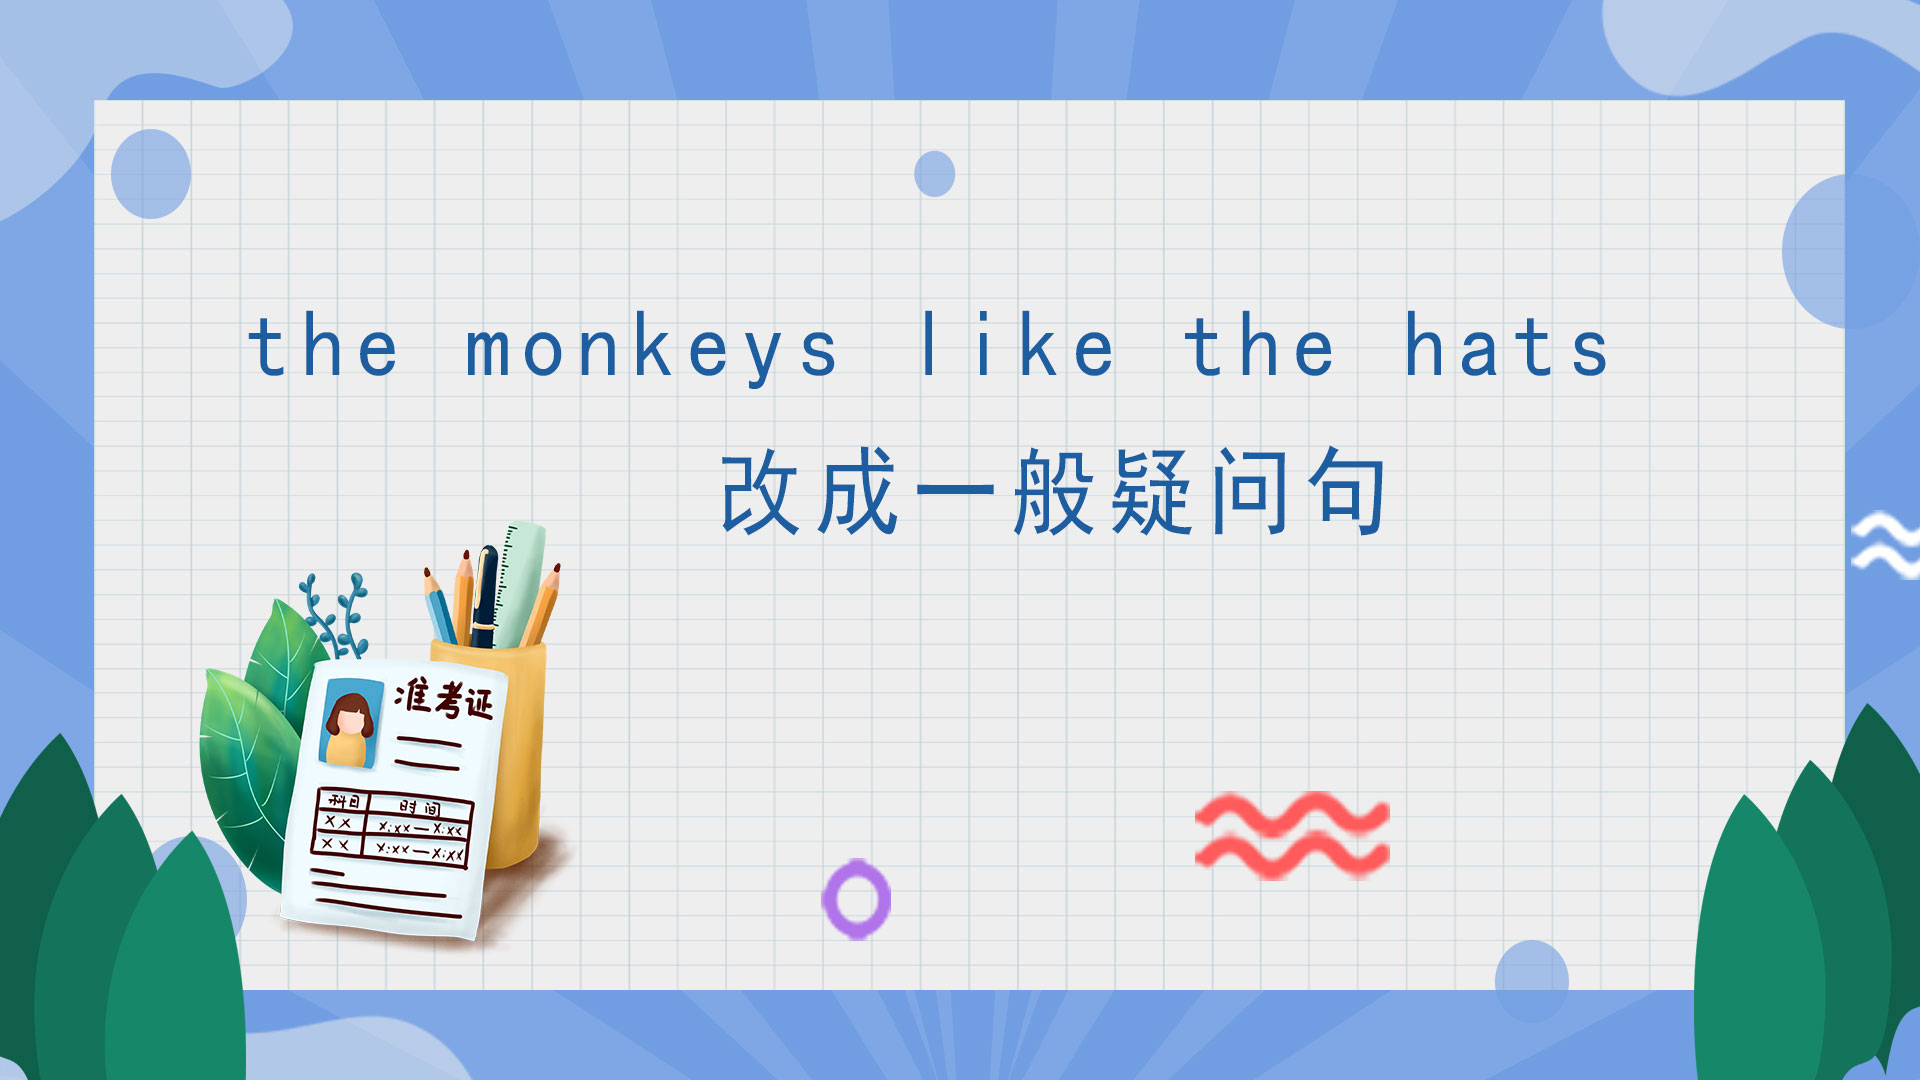 the monkeys like the hats改成一般疑问句